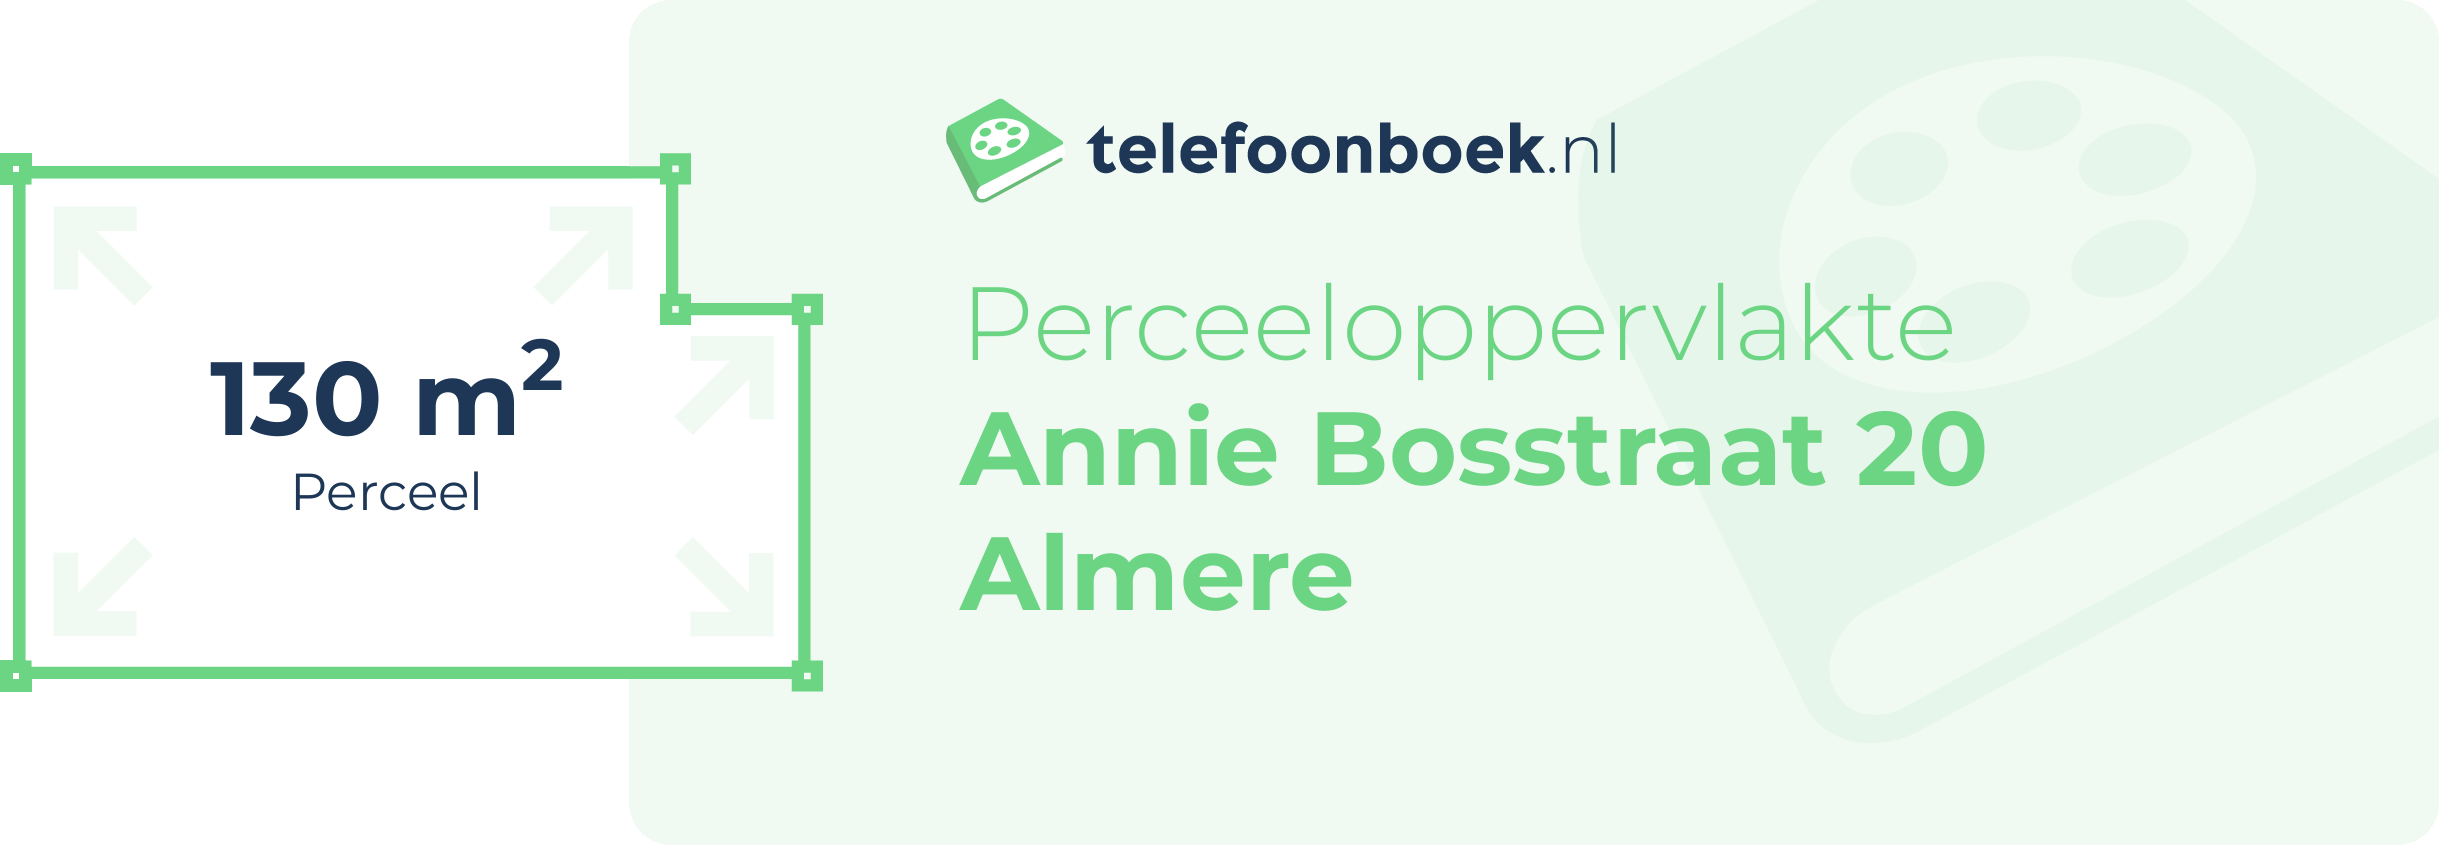 Perceeloppervlakte Annie Bosstraat 20 Almere